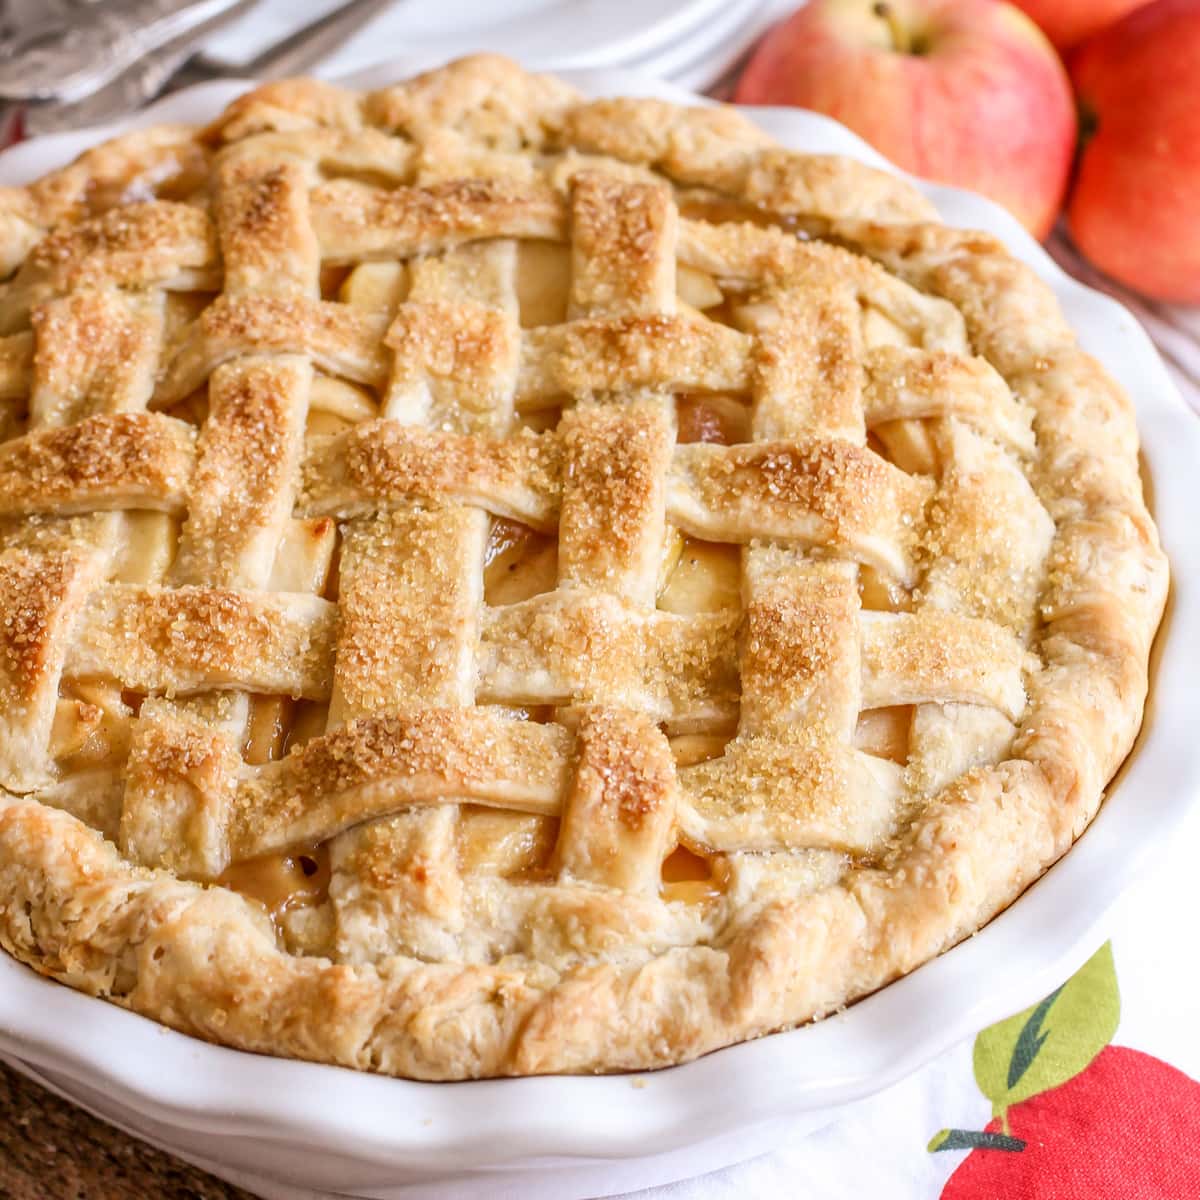 Fall dessert recipes - entire best apple pie in a white pie dish.